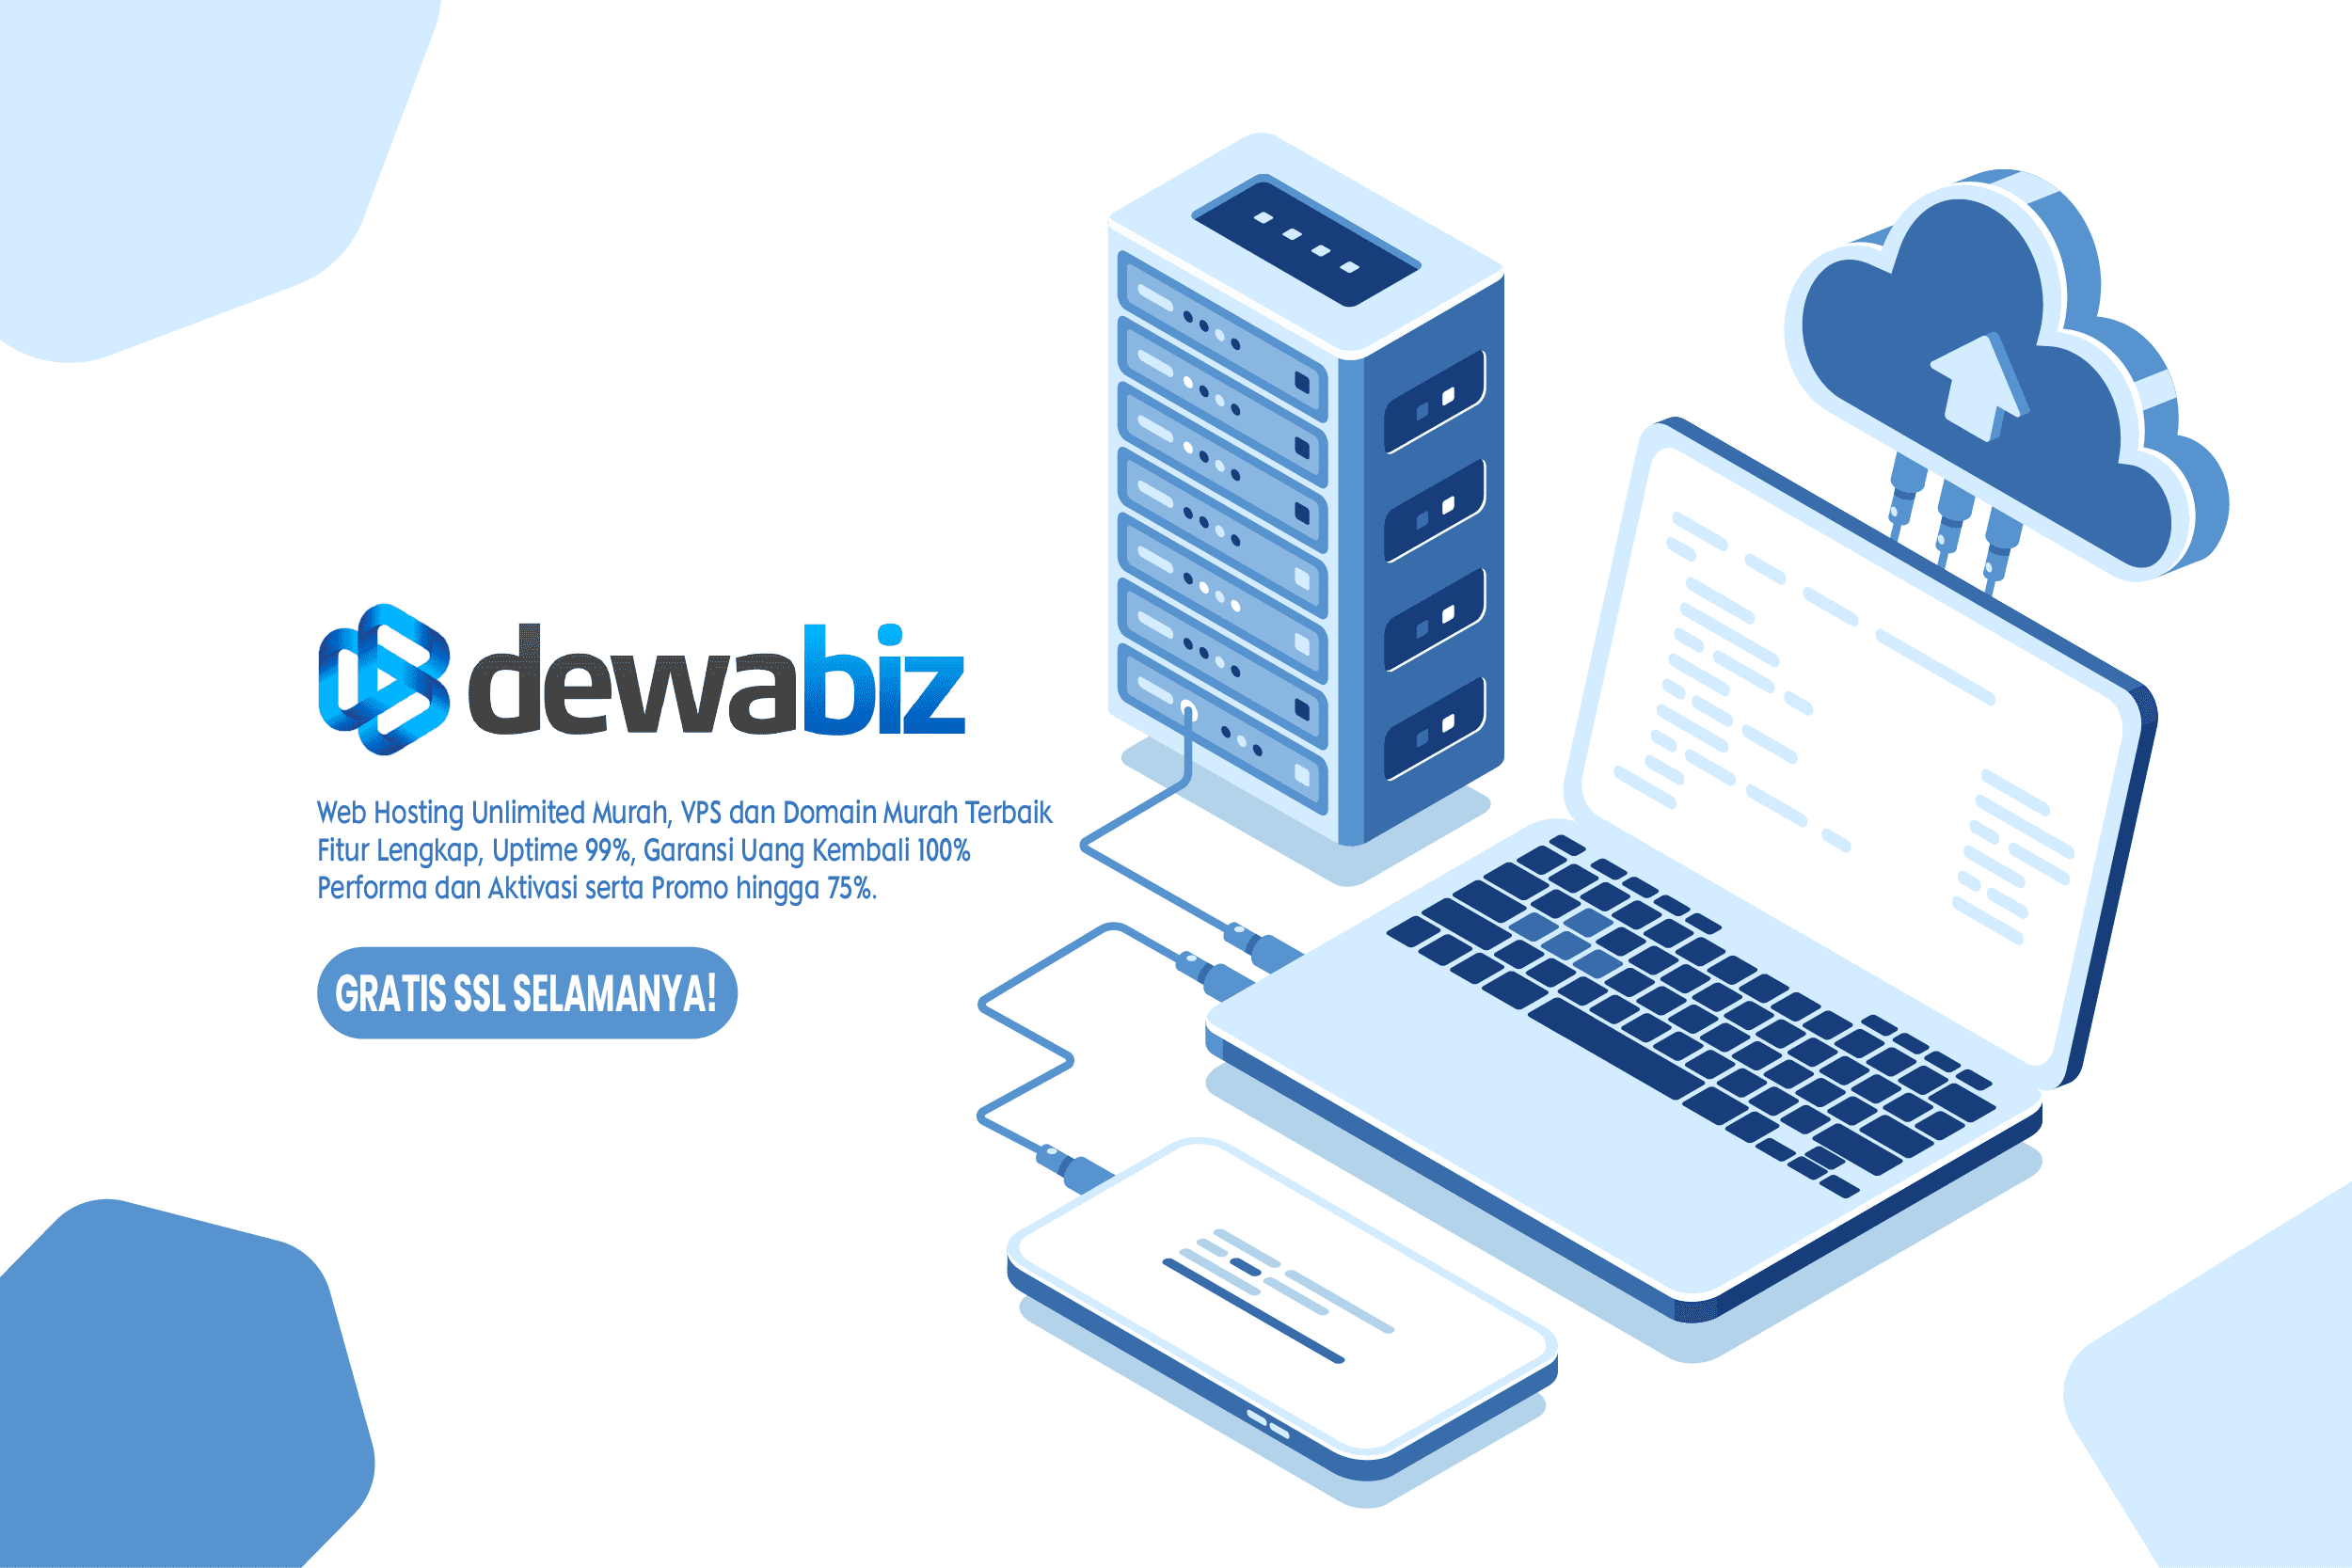 review dewabiz web hosting unlimited murah indonesia